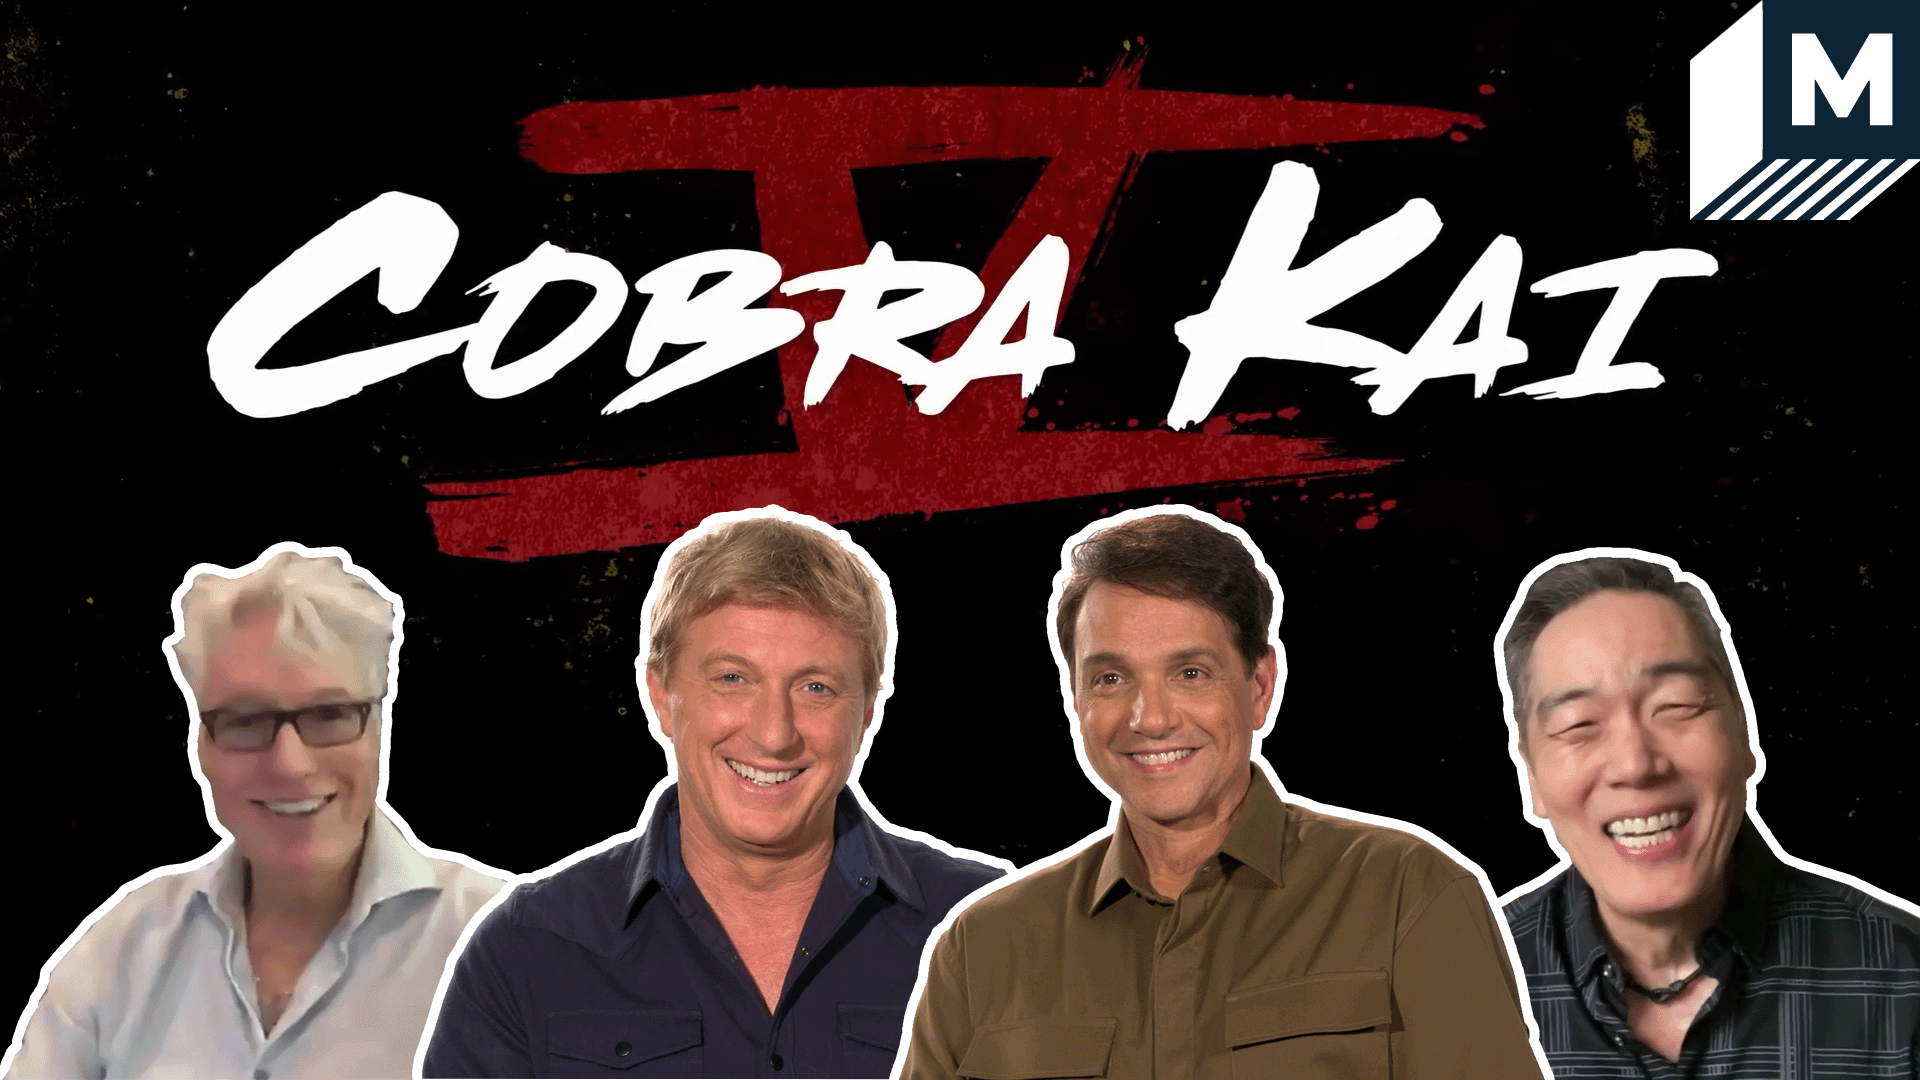 Cobra Kai cast smiling in front of the Cobra Kai poster